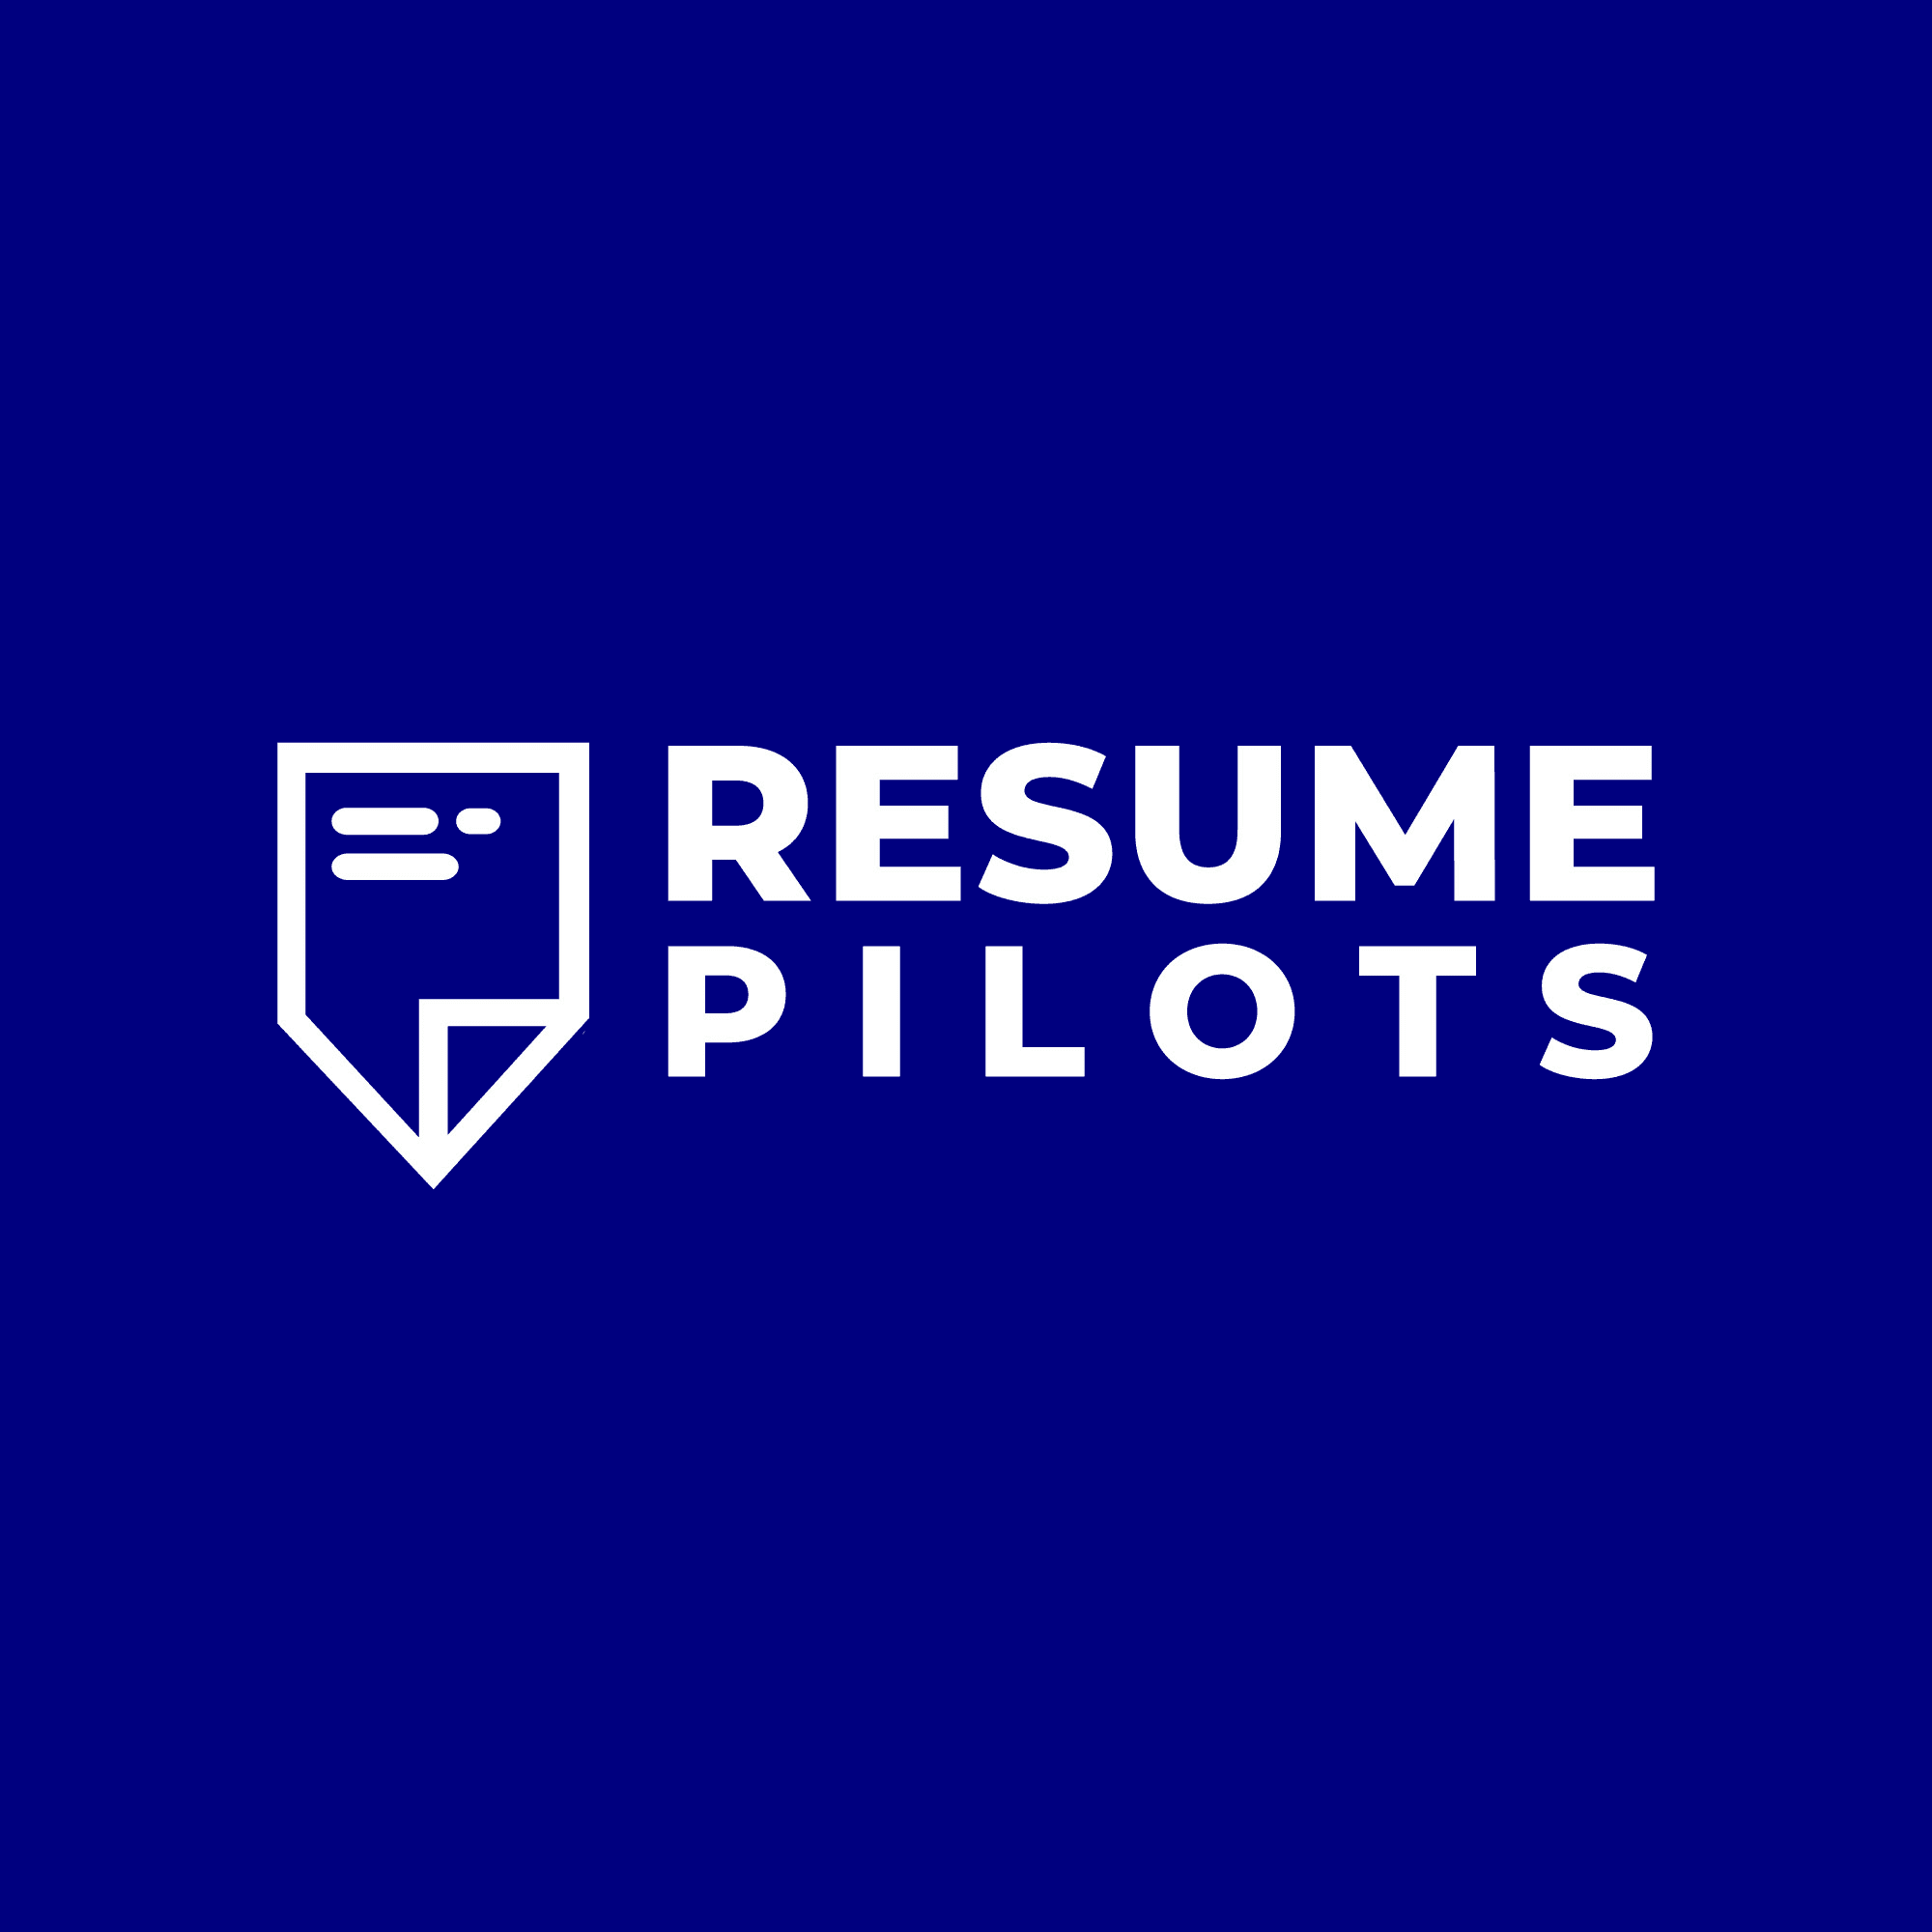 Resume Pilots Resume Writing Service